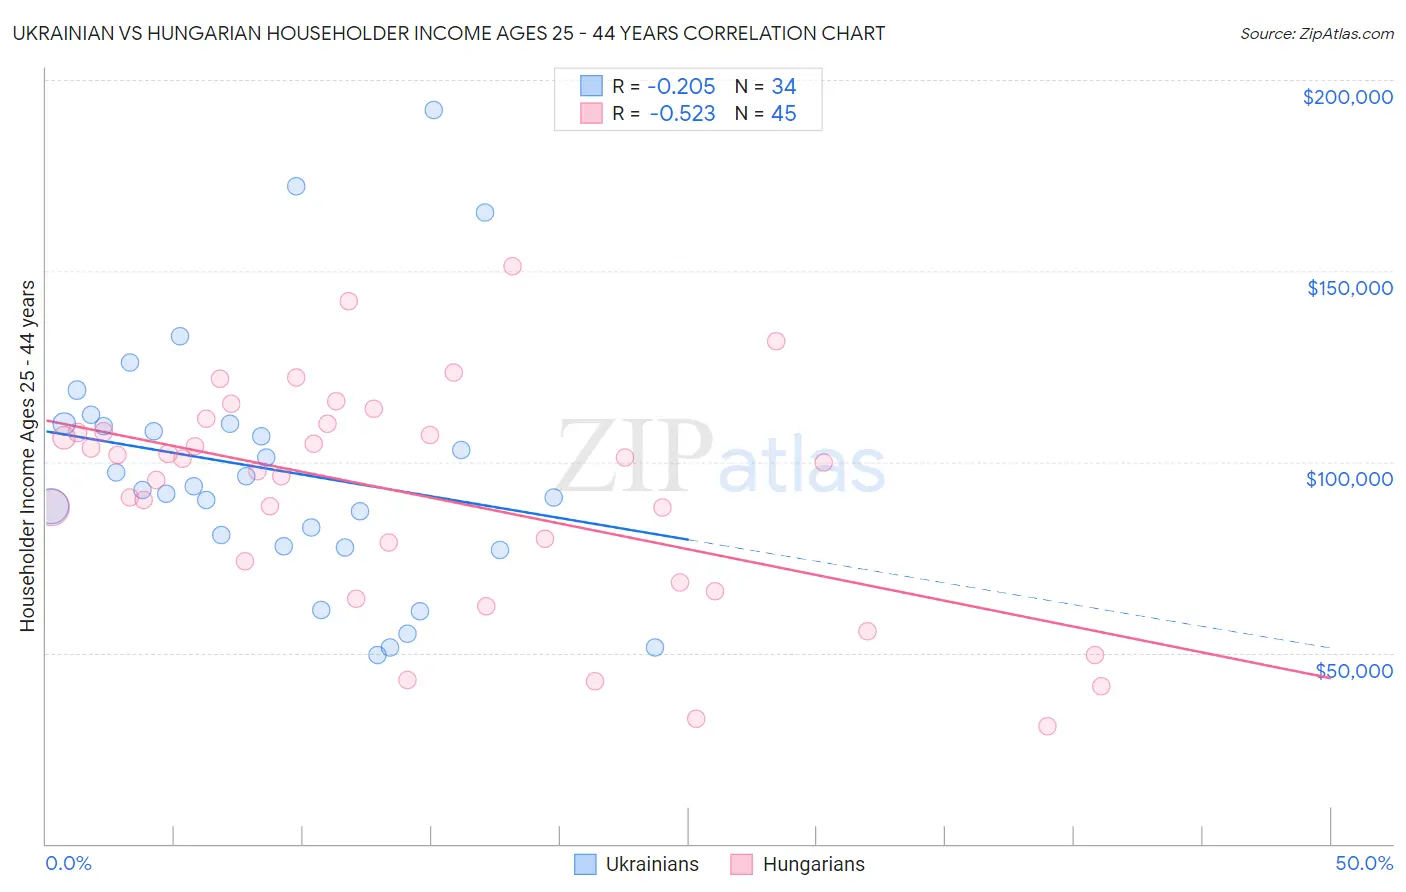 Ukrainian vs Hungarian Householder Income Ages 25 - 44 years